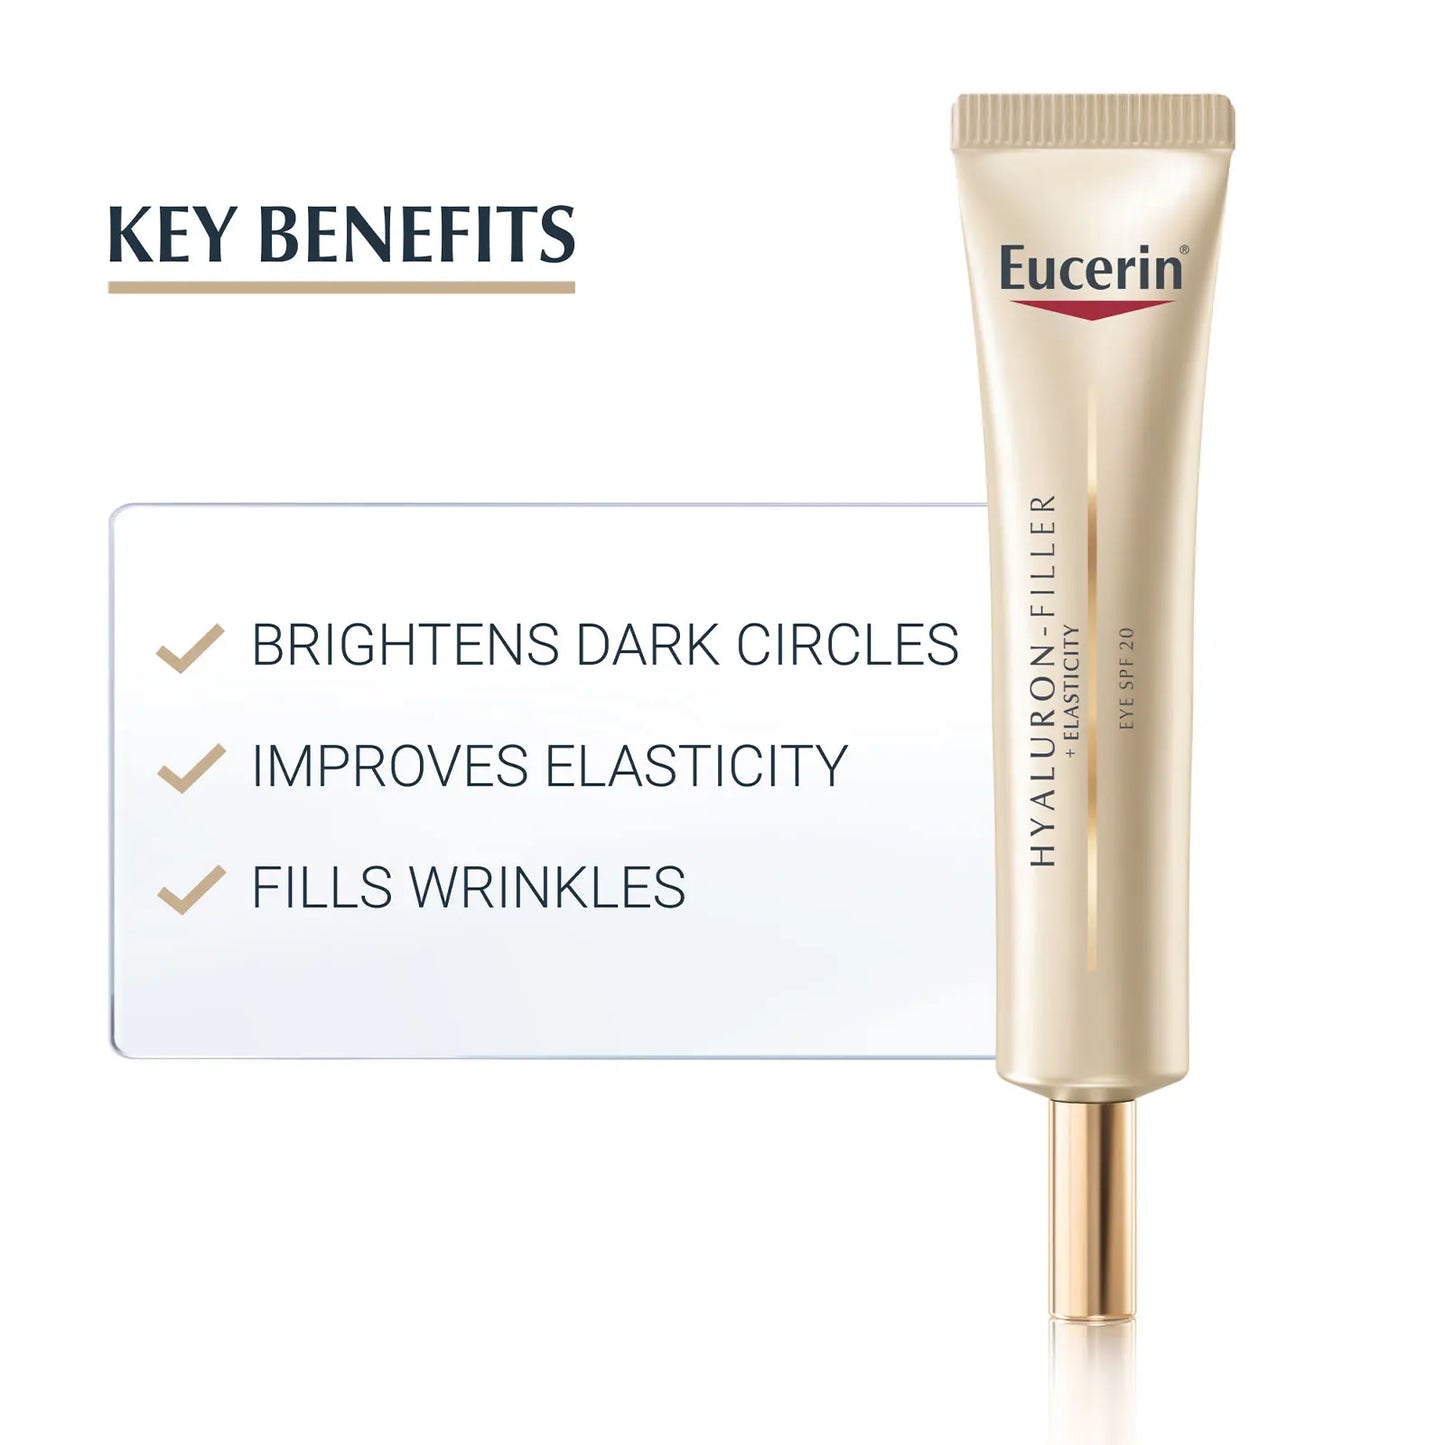 Eucerin Hyaluron-Filler + Elasticity Anti-Ageing Eye Cream with SPF15 15ml